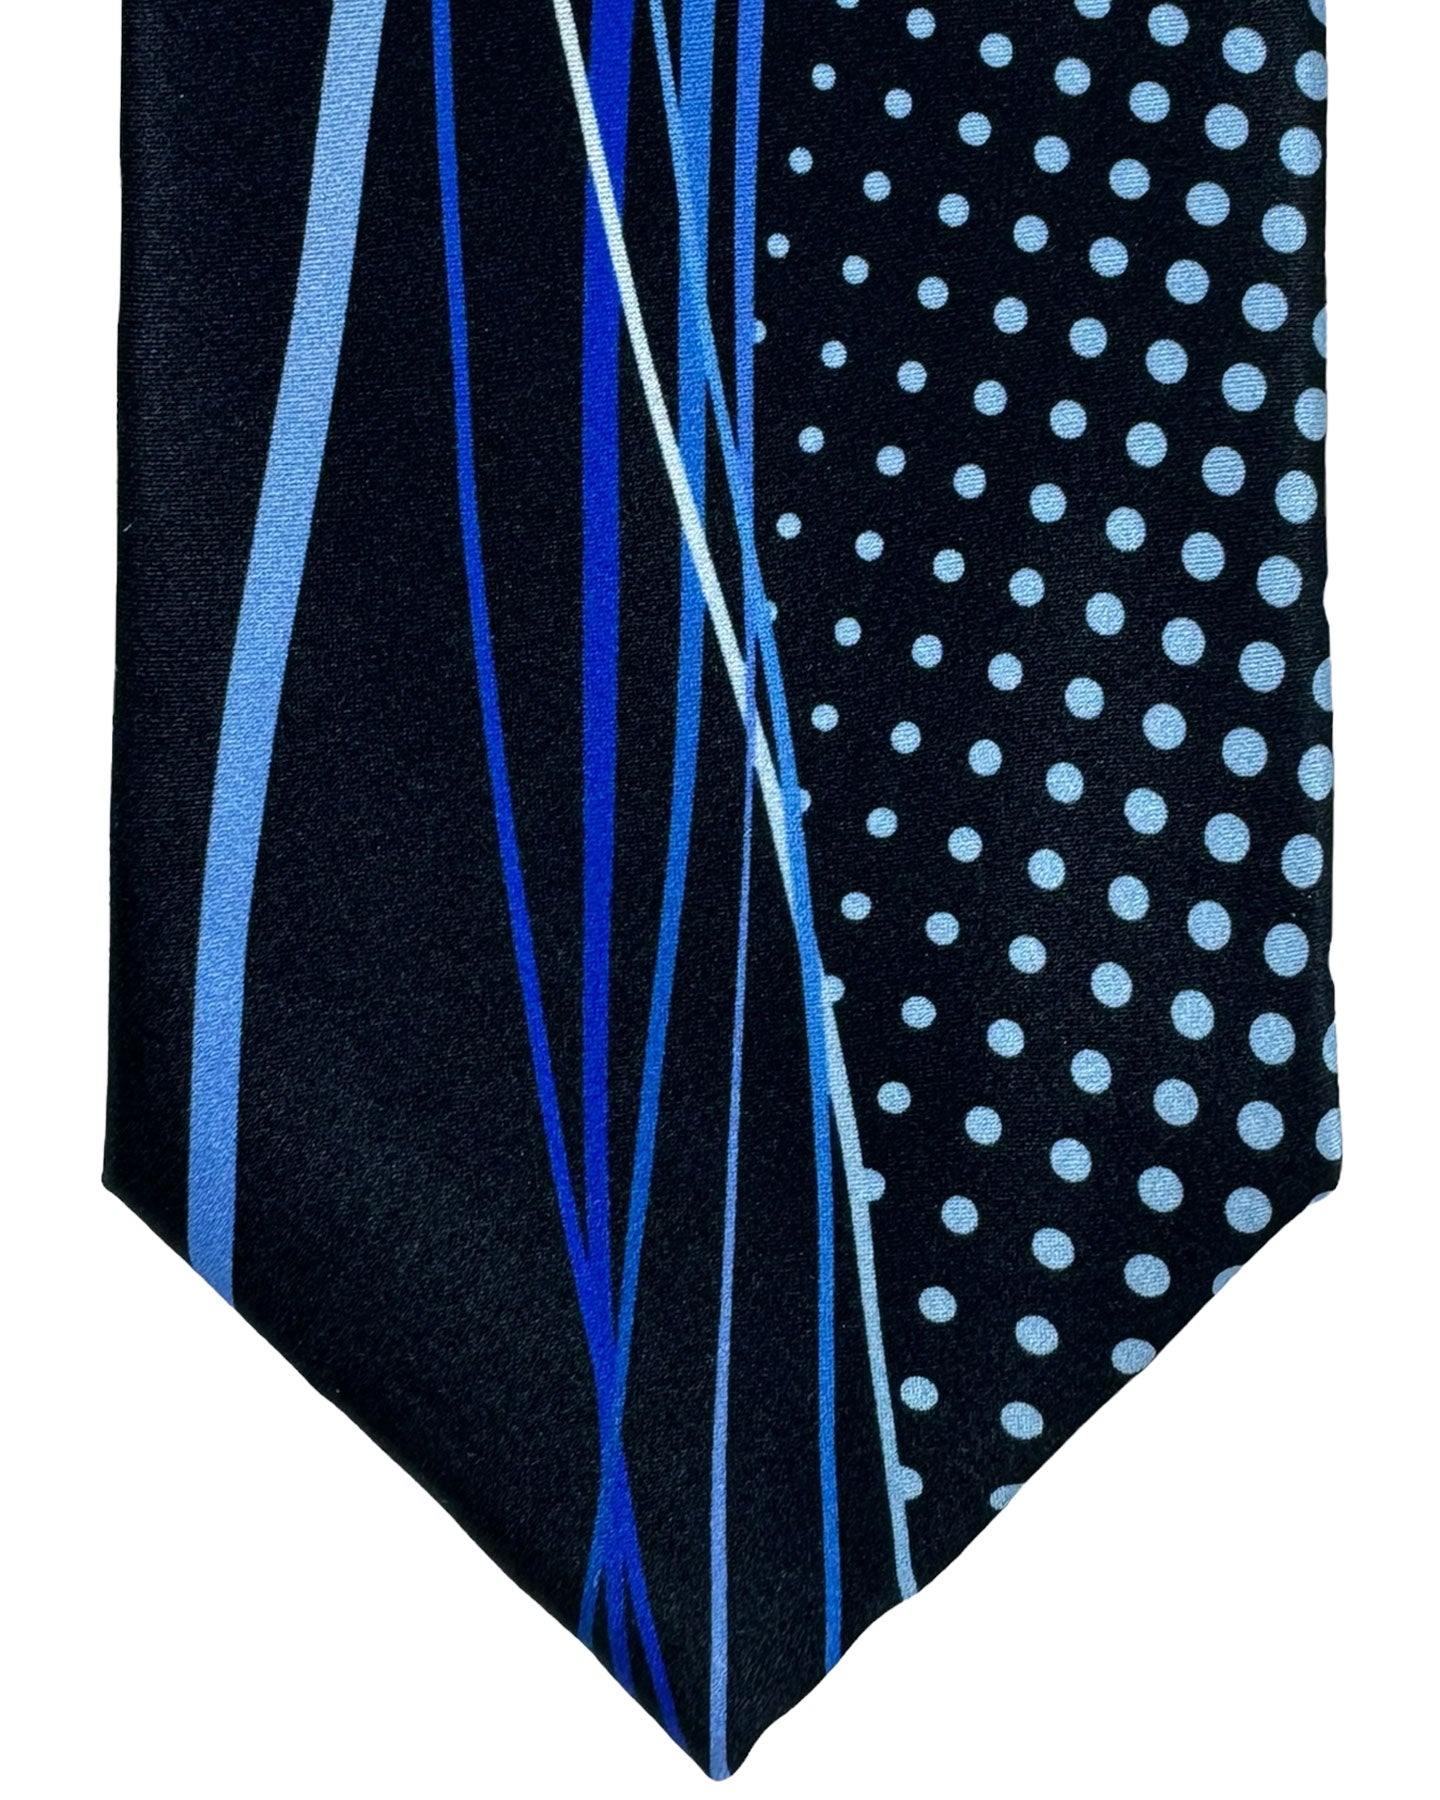 Vitaliano Pancaldi Silk Tie Black Blue Royal Blue Dots Swirl Design